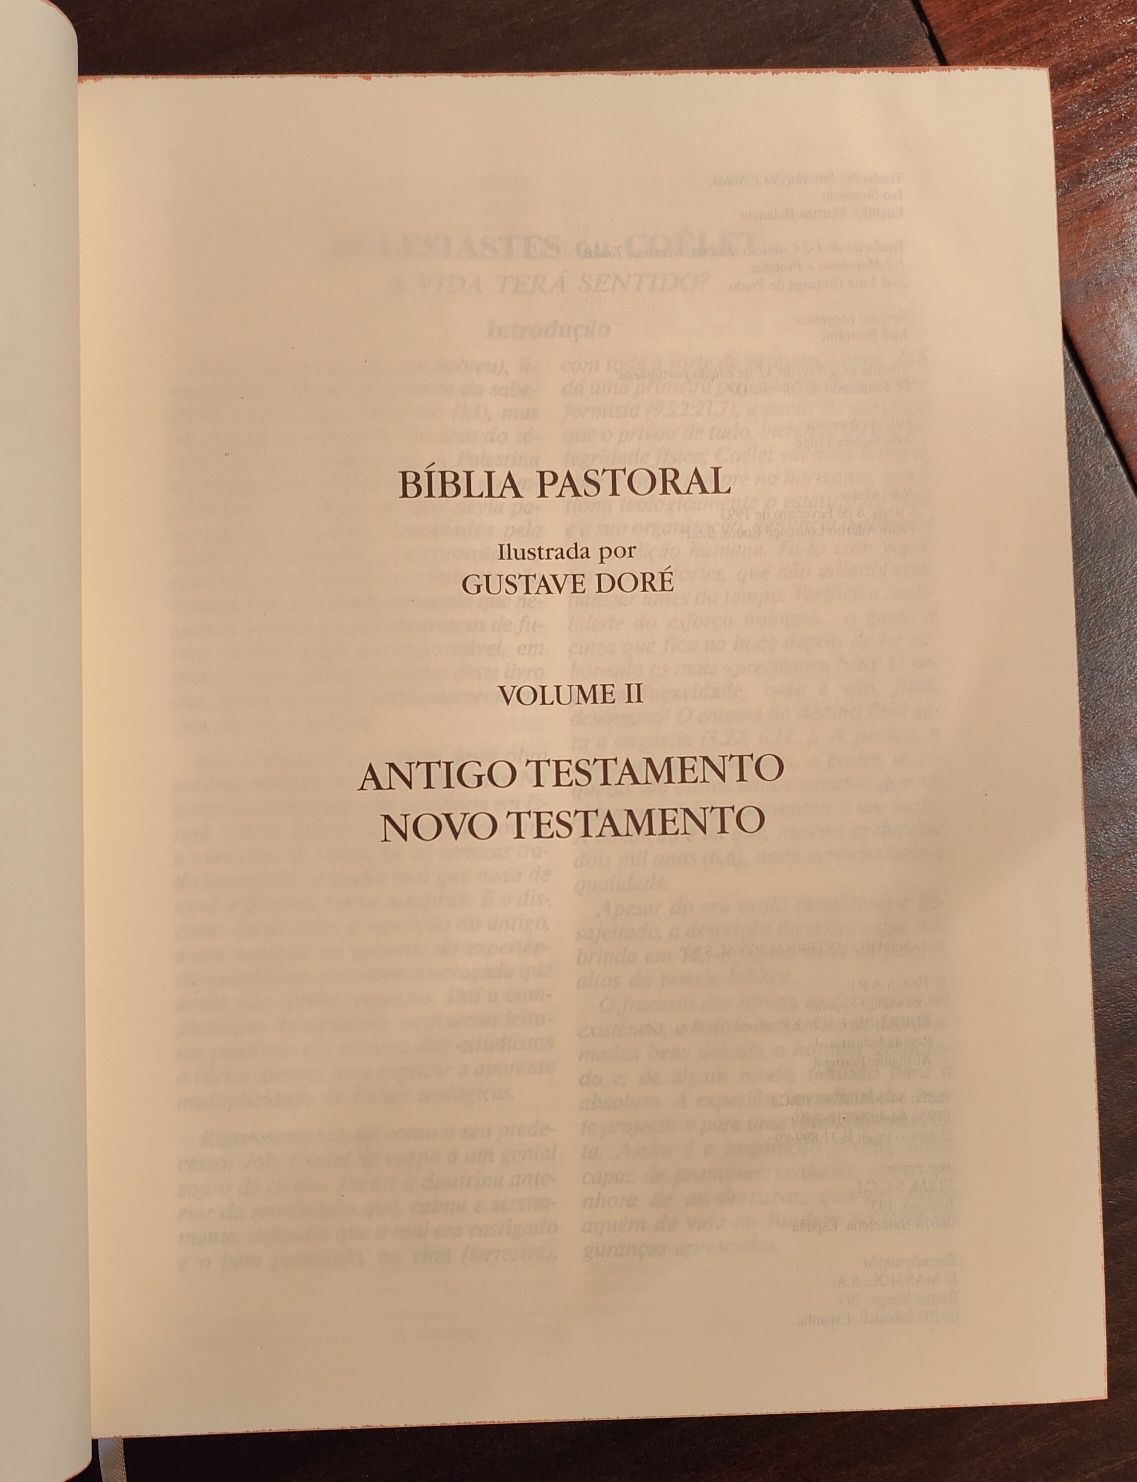 Bíblia Católica, em 2 volumes + oferta